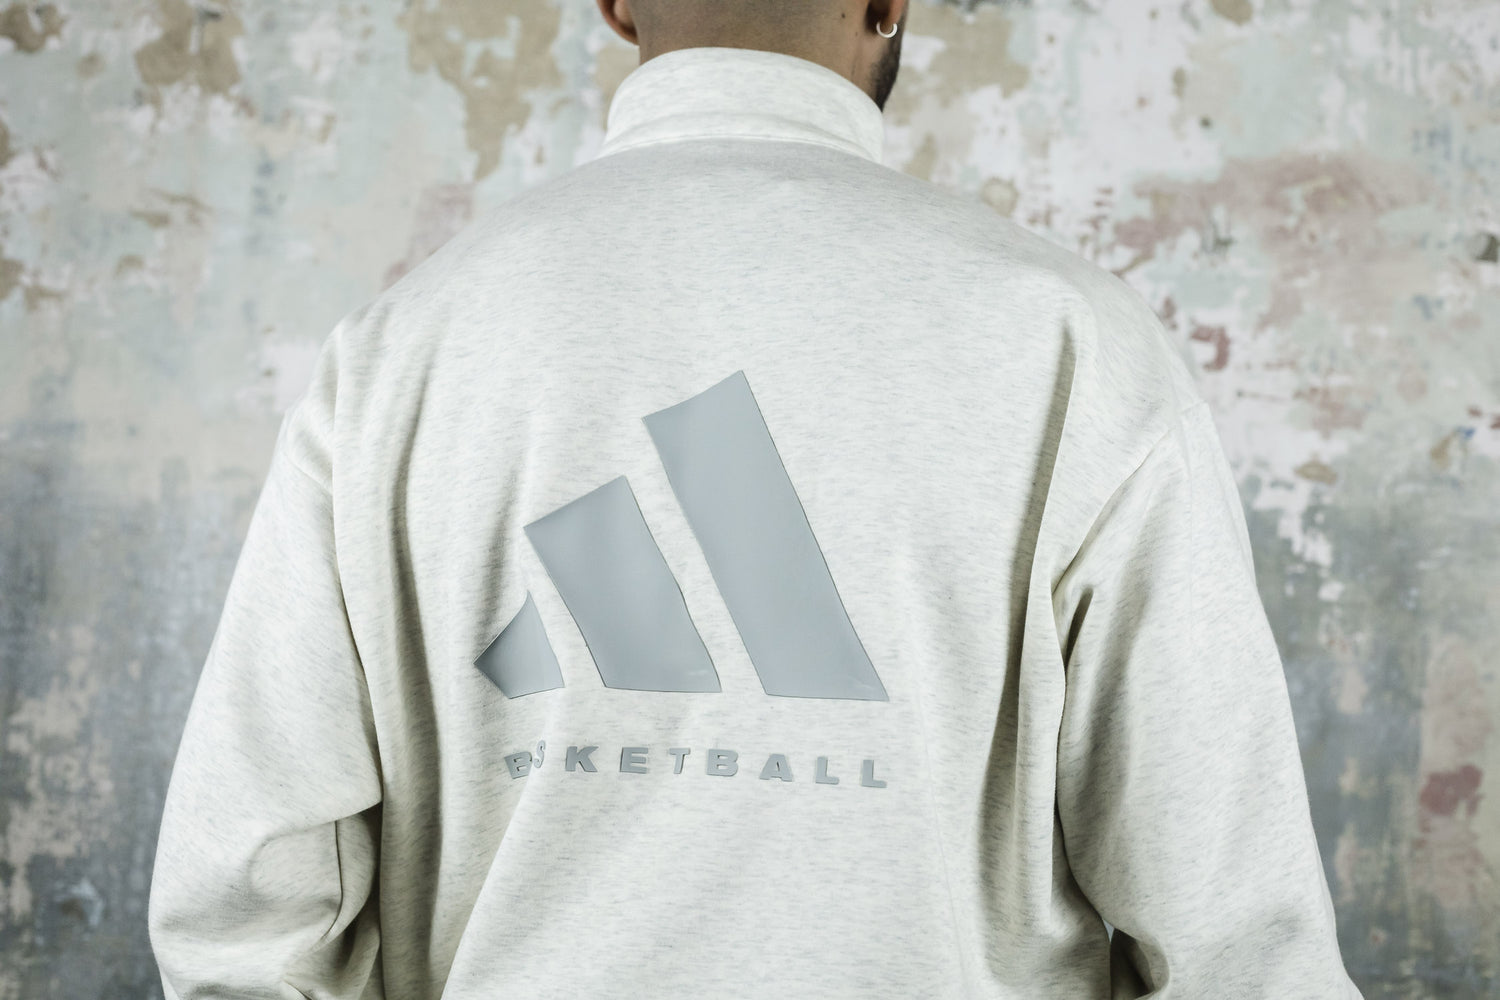 adidas One Basketball Half Zip Sweatshirt (All Gender)